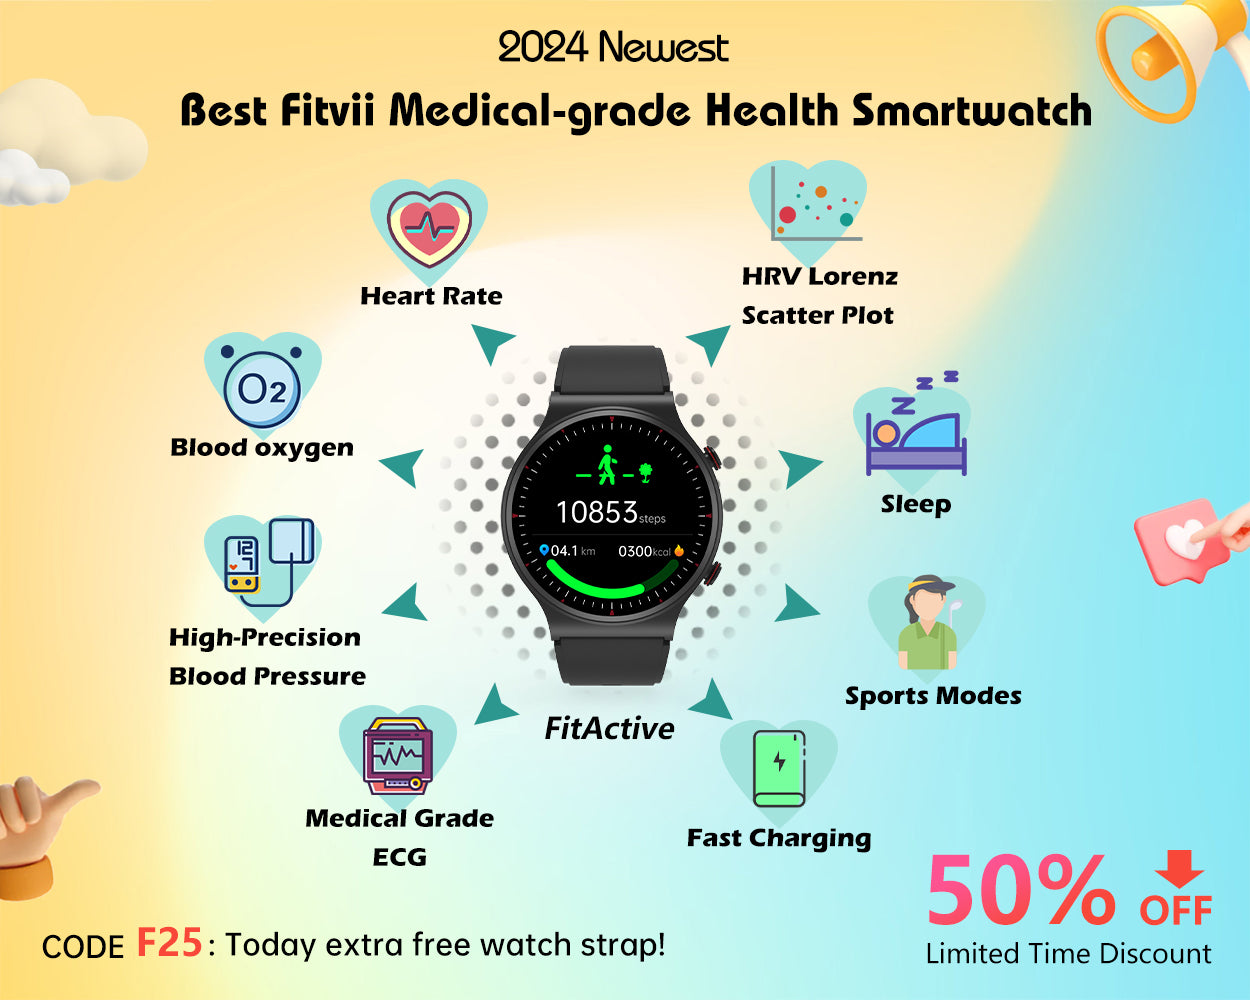 Newest FITVII™ Medical-grade ECG SmartWatch - Monitor Blood Pressure for Women & Men - Now 50% OFF! 🔥